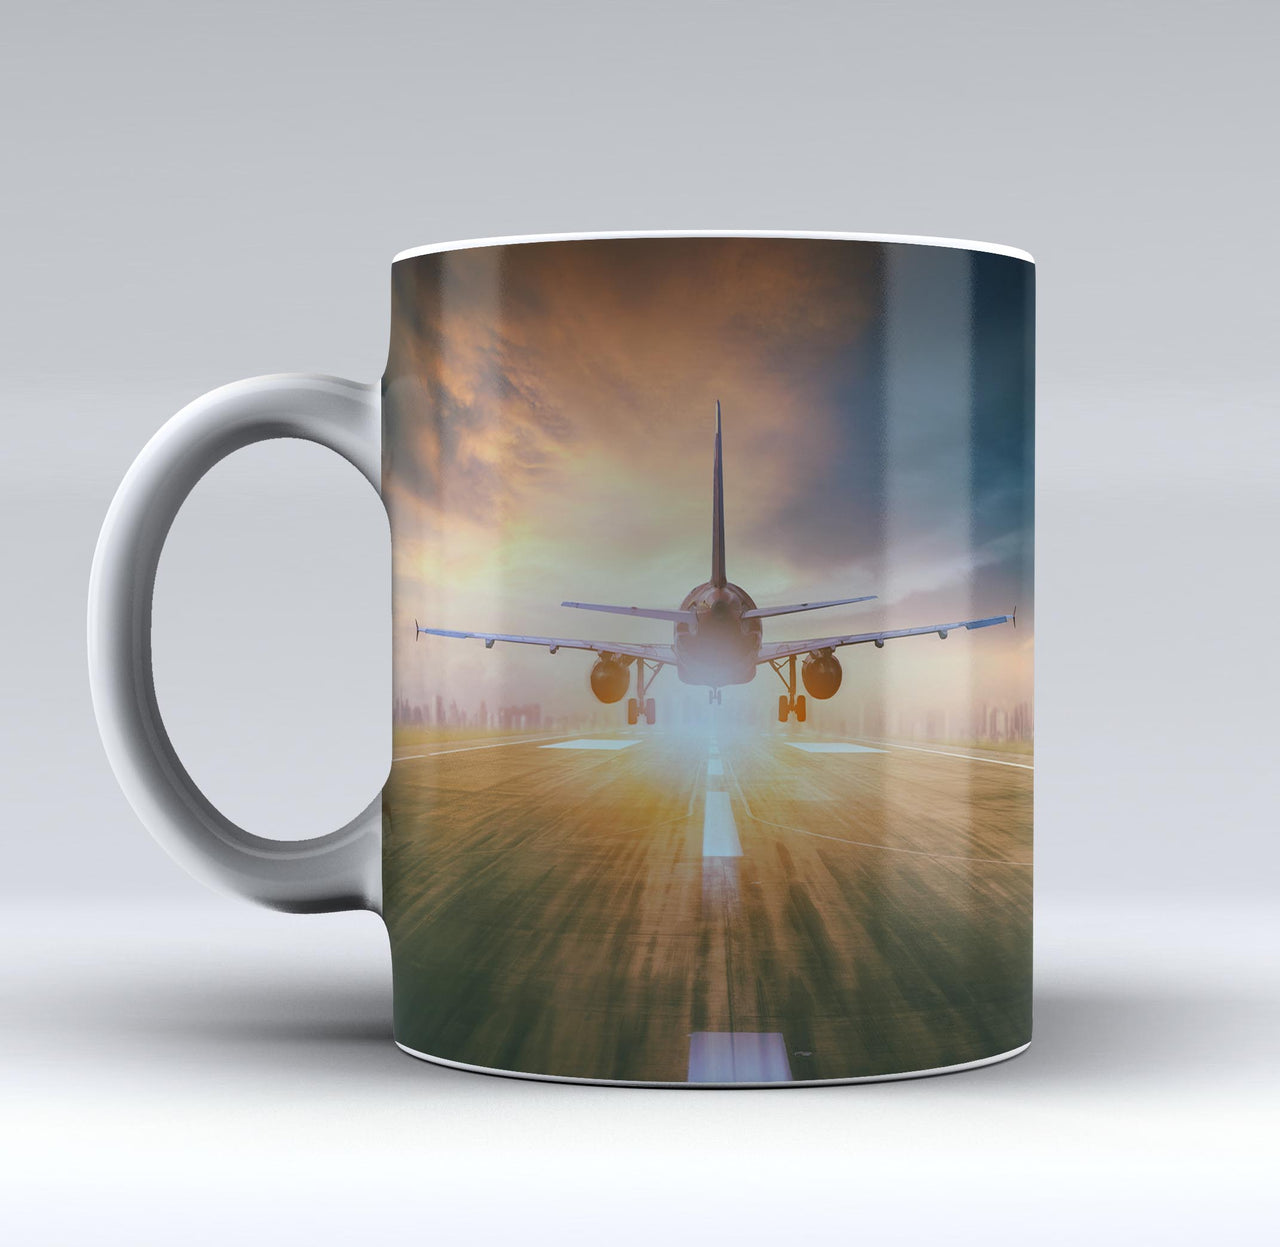 Airplane Flying Over Runway Designed Mugs